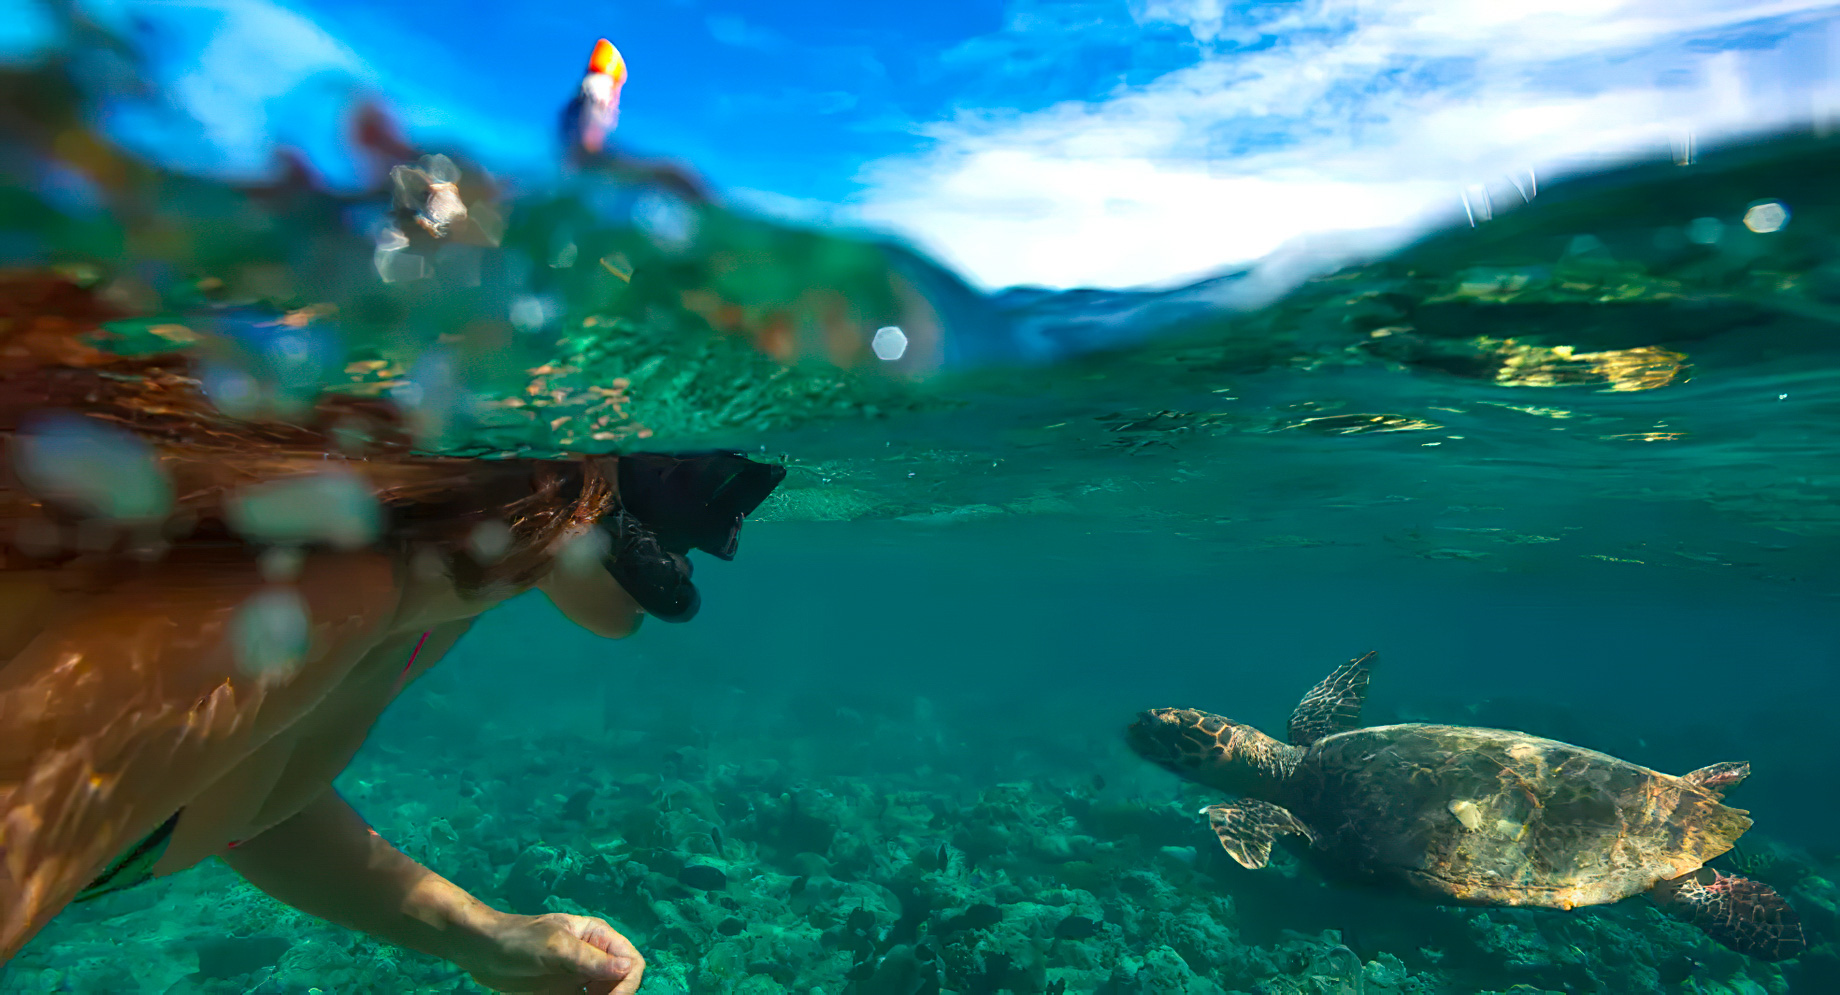 Anantara Kihavah Maldives Villas Resort – Baa Atoll, Maldives – Turtle Underwater